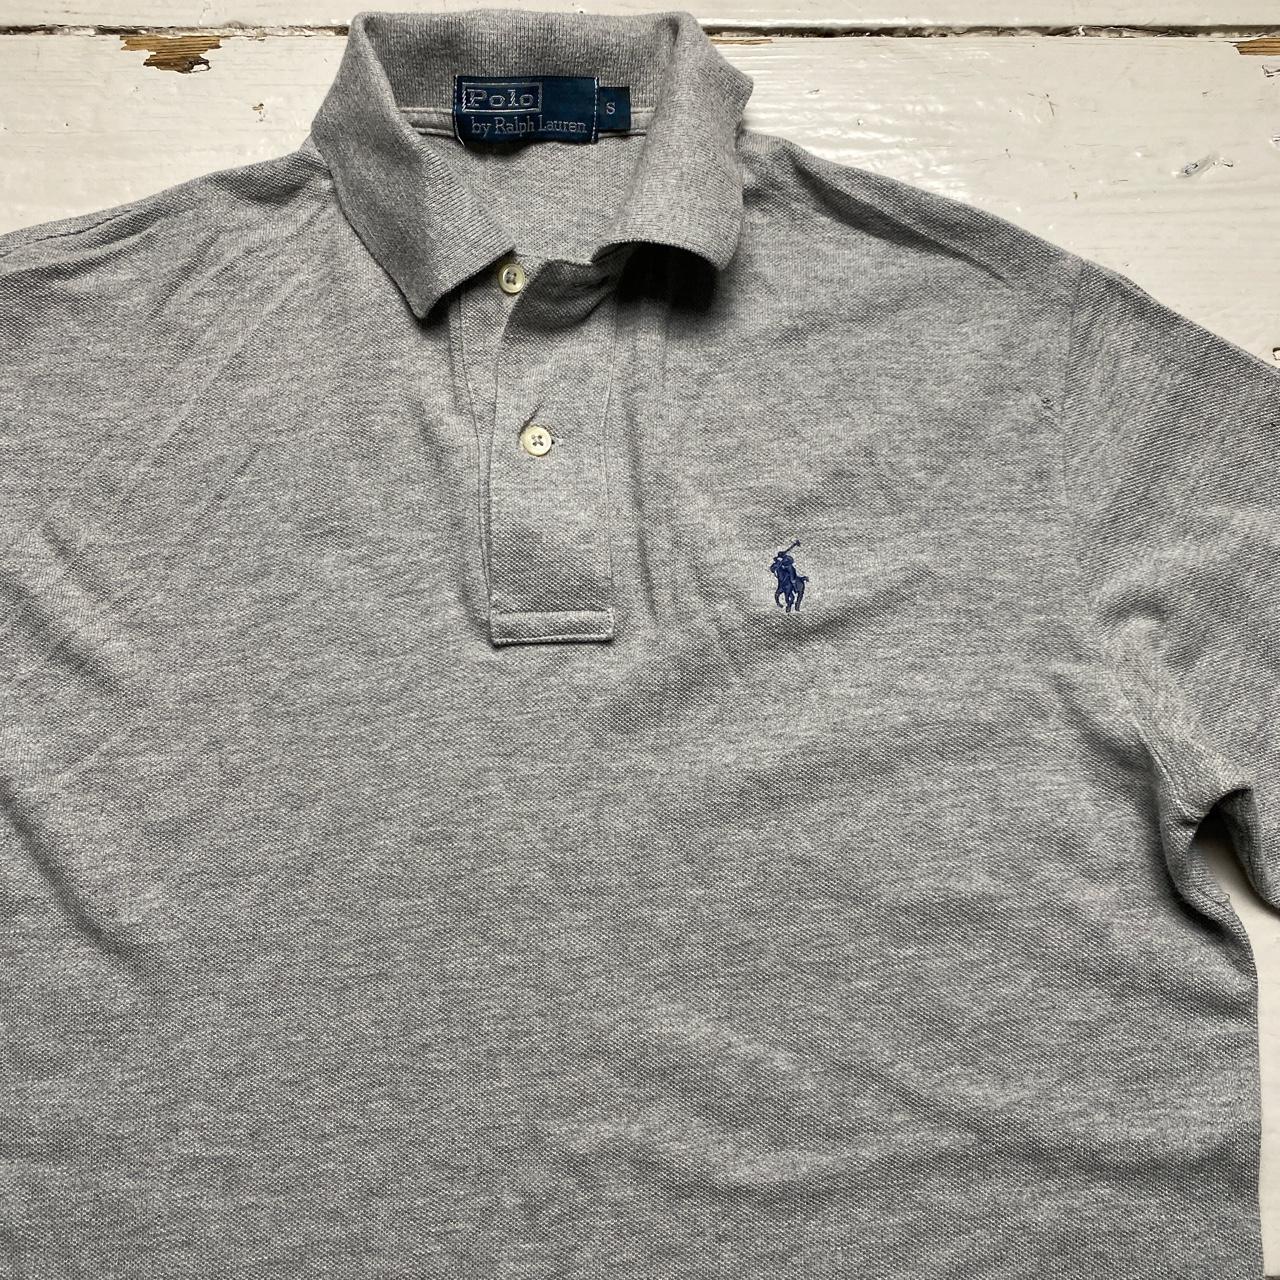 Ralph Lauren Polo Grey and Navy Long Sleeve Polo Shirt